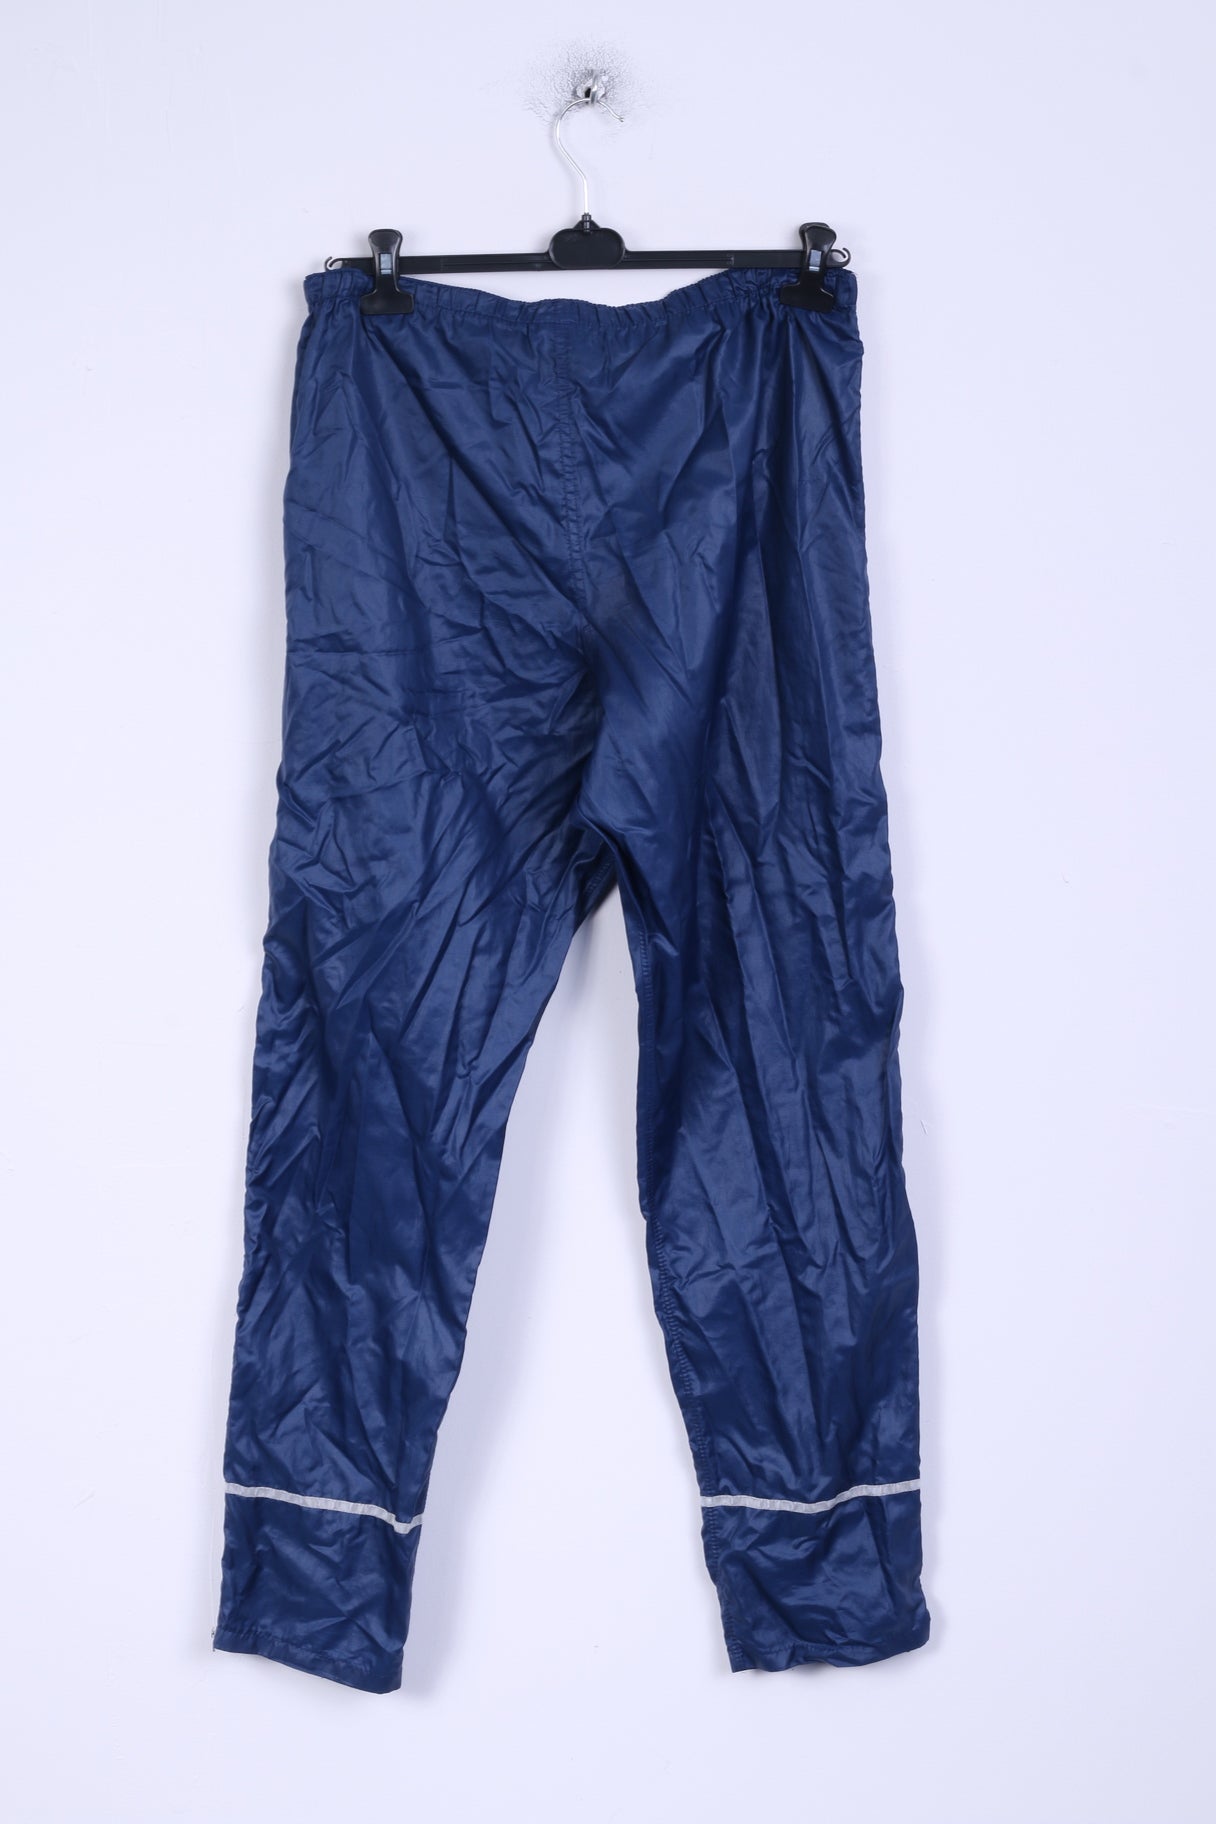 New Line Mens XL Pants Navy Nylon Waterproof Trekking Trousers